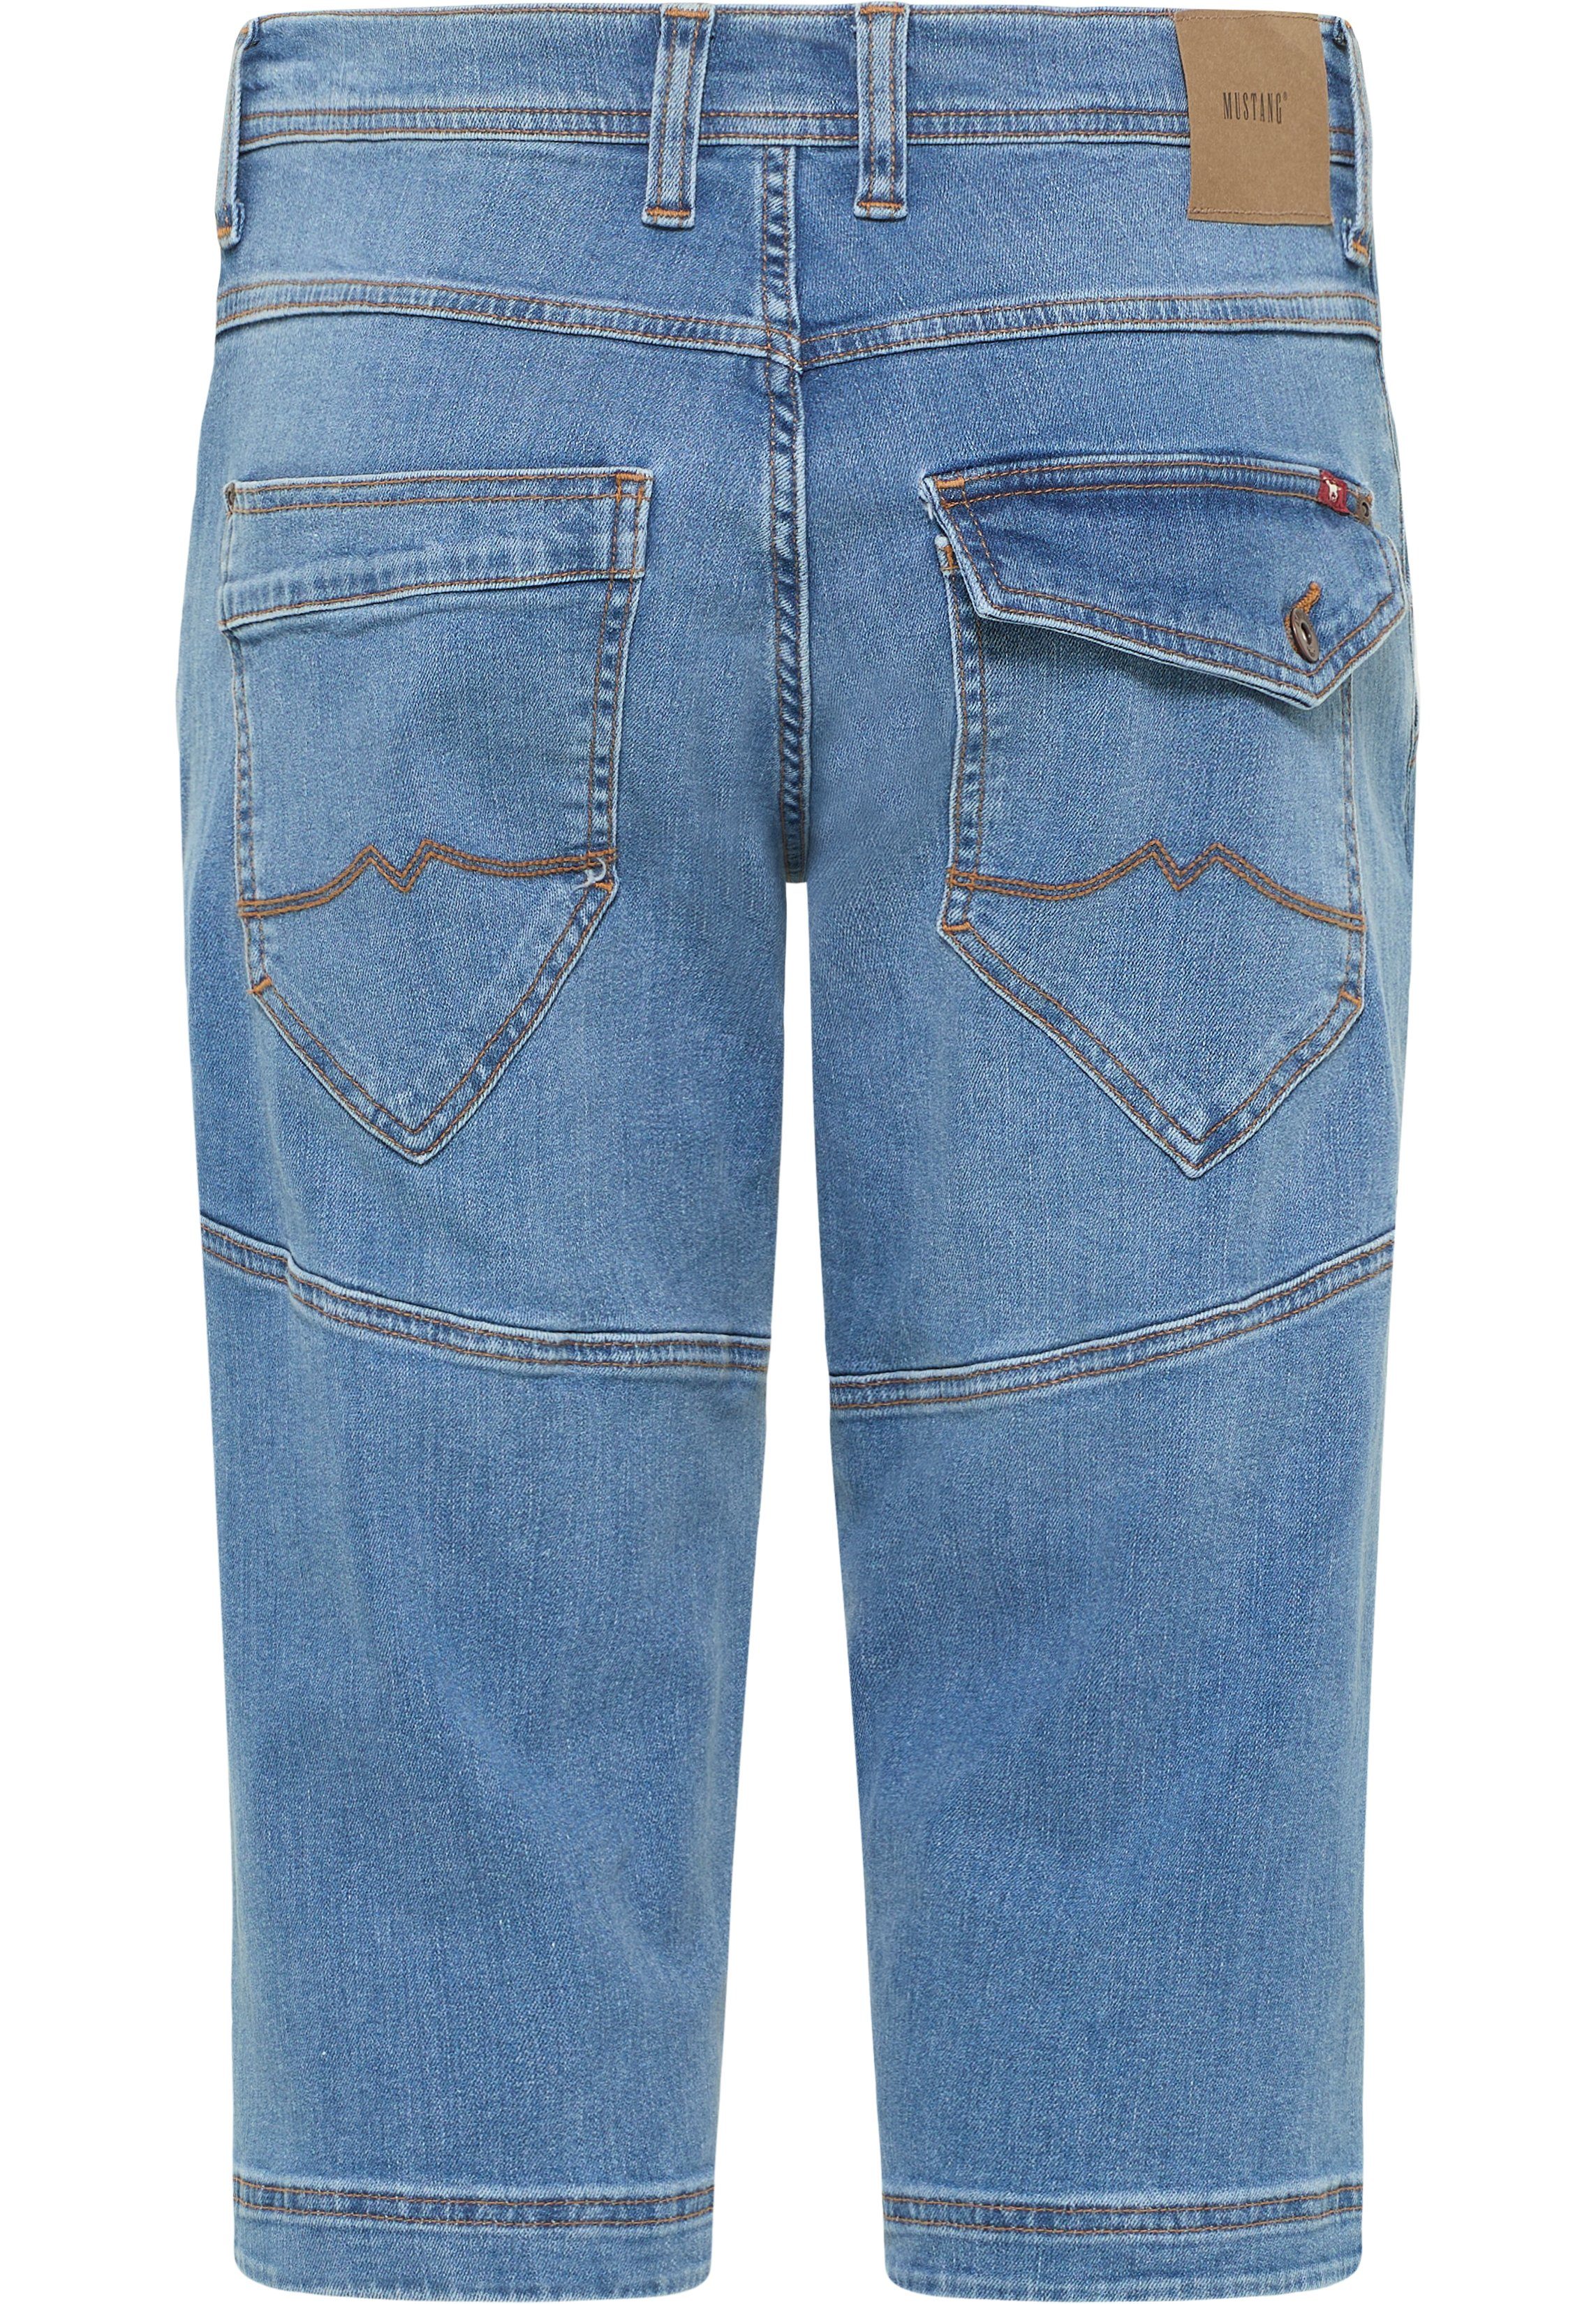 MUSTANG Style blau-5000583 Jeansshorts Shorts Fremont